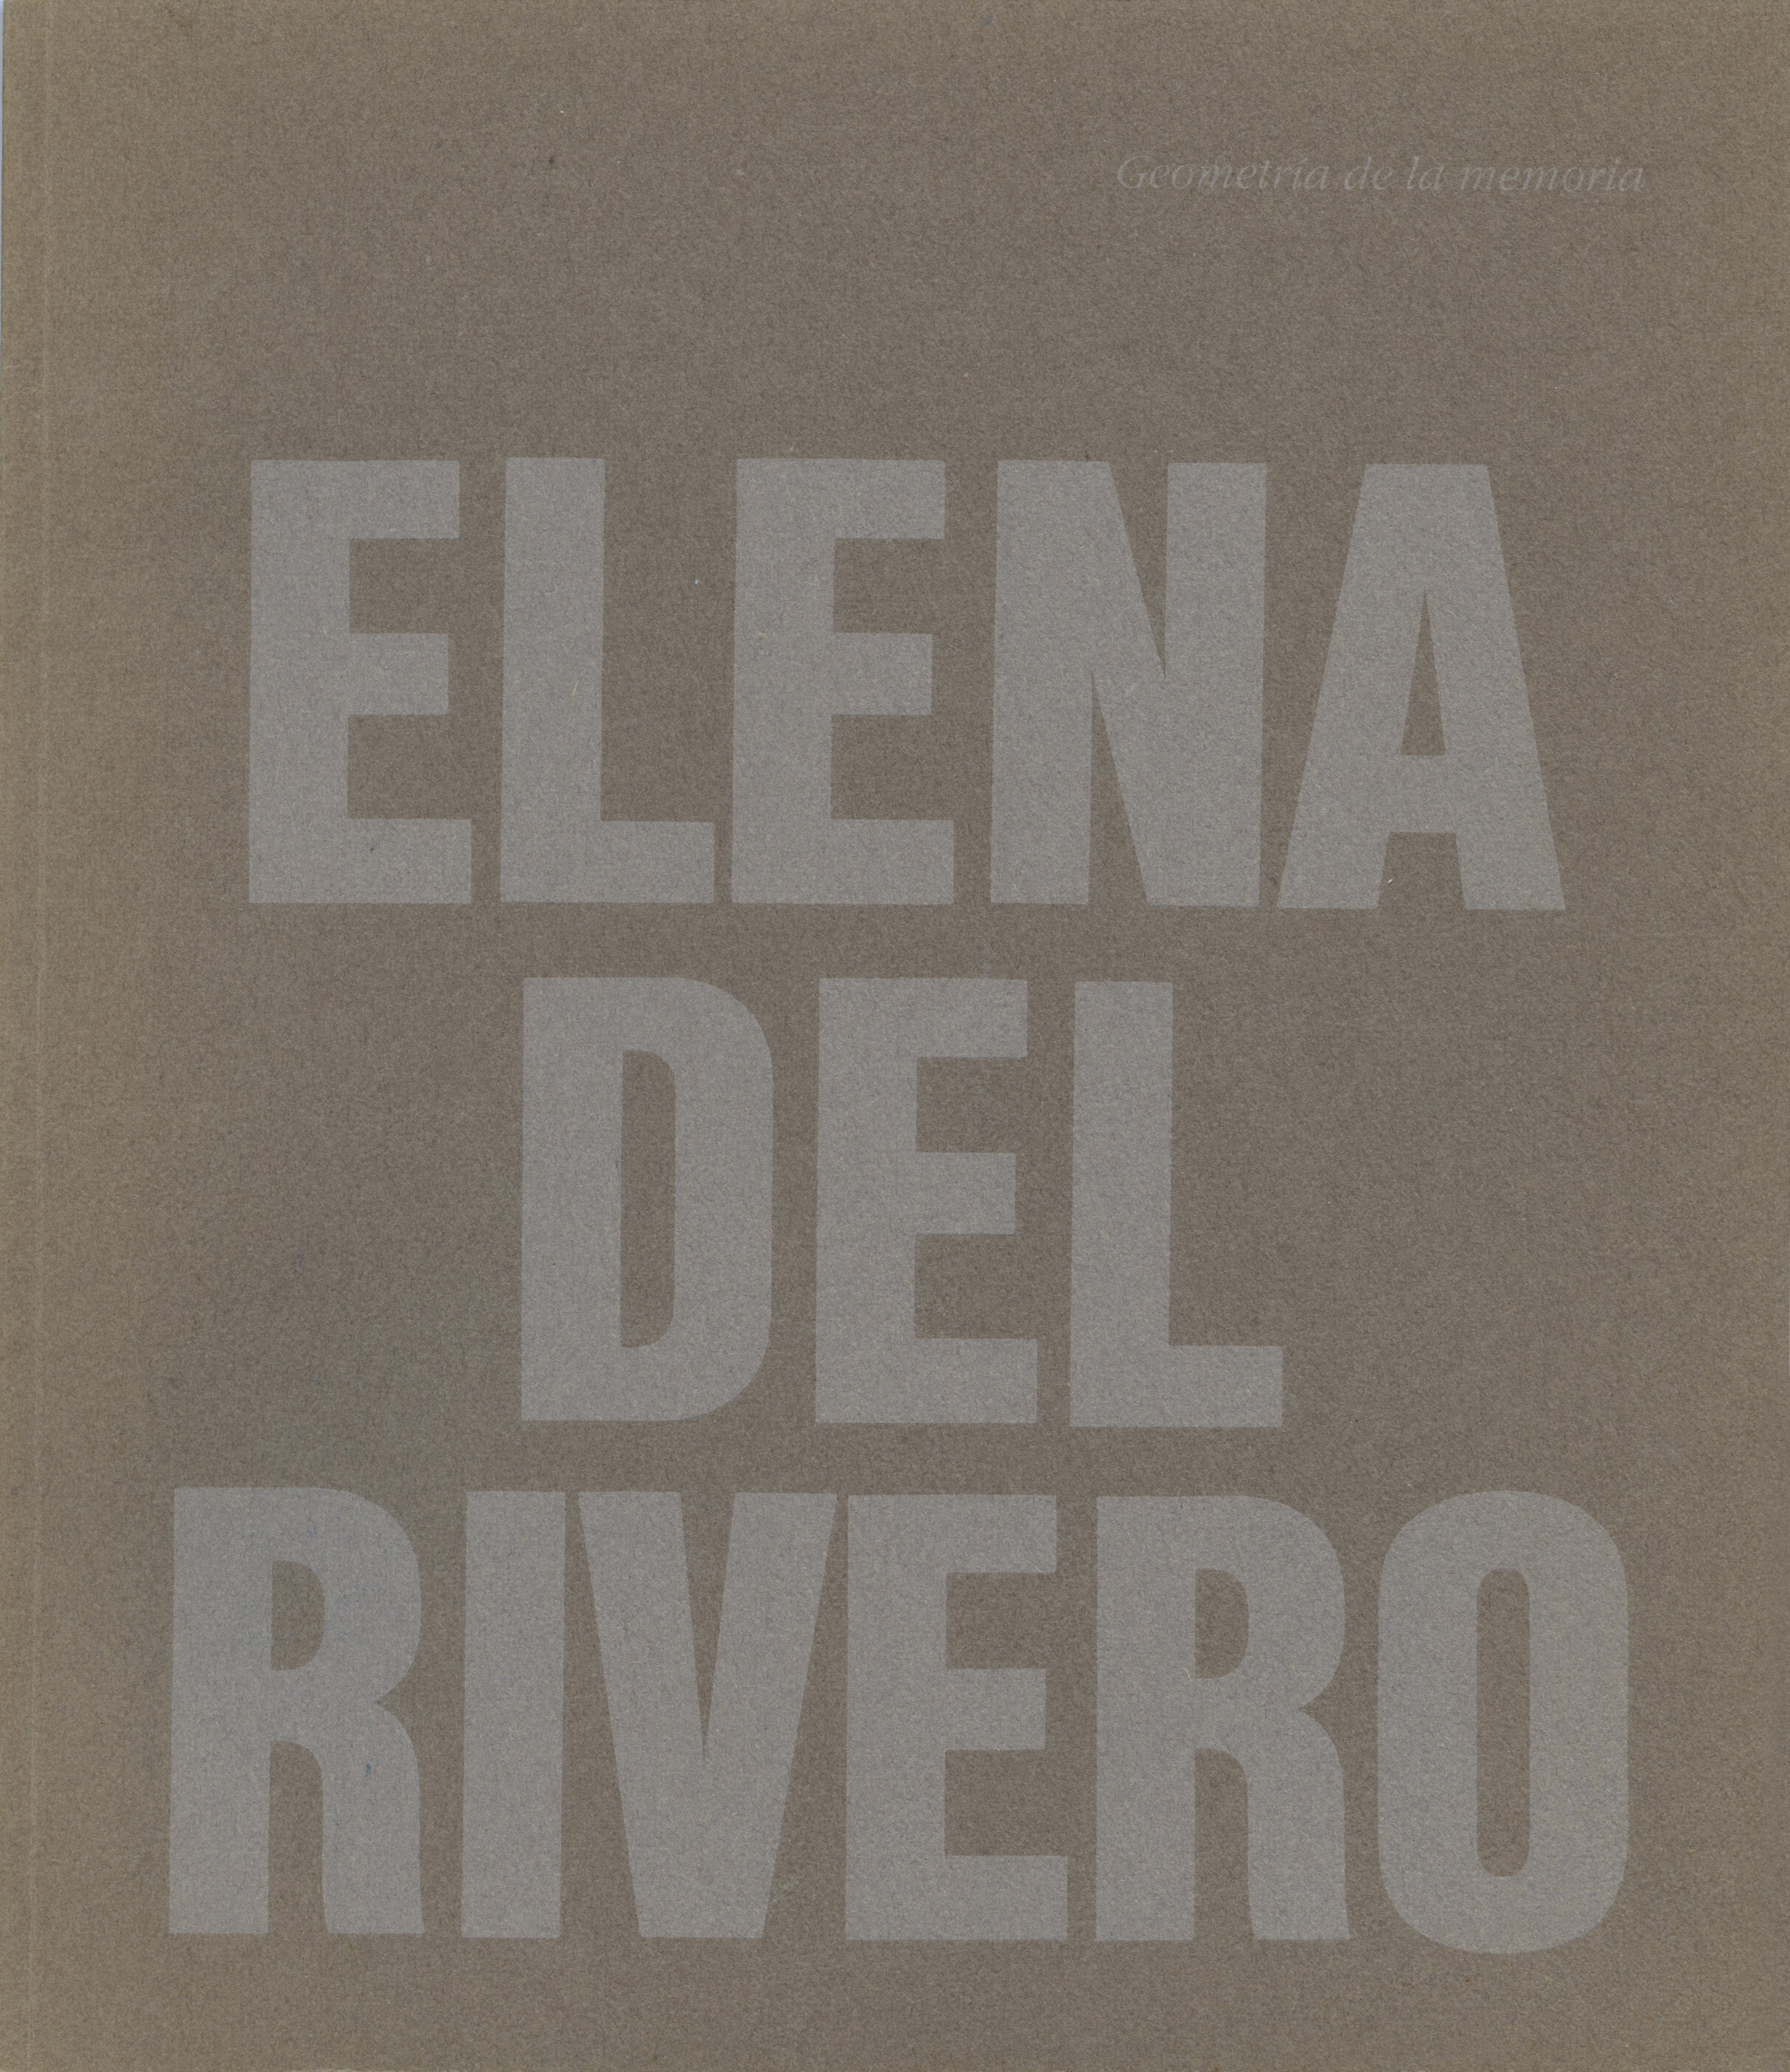  Exhibition catalog published by Galeria Mar Estrada (1989) with essay by Francisco Jarauta 